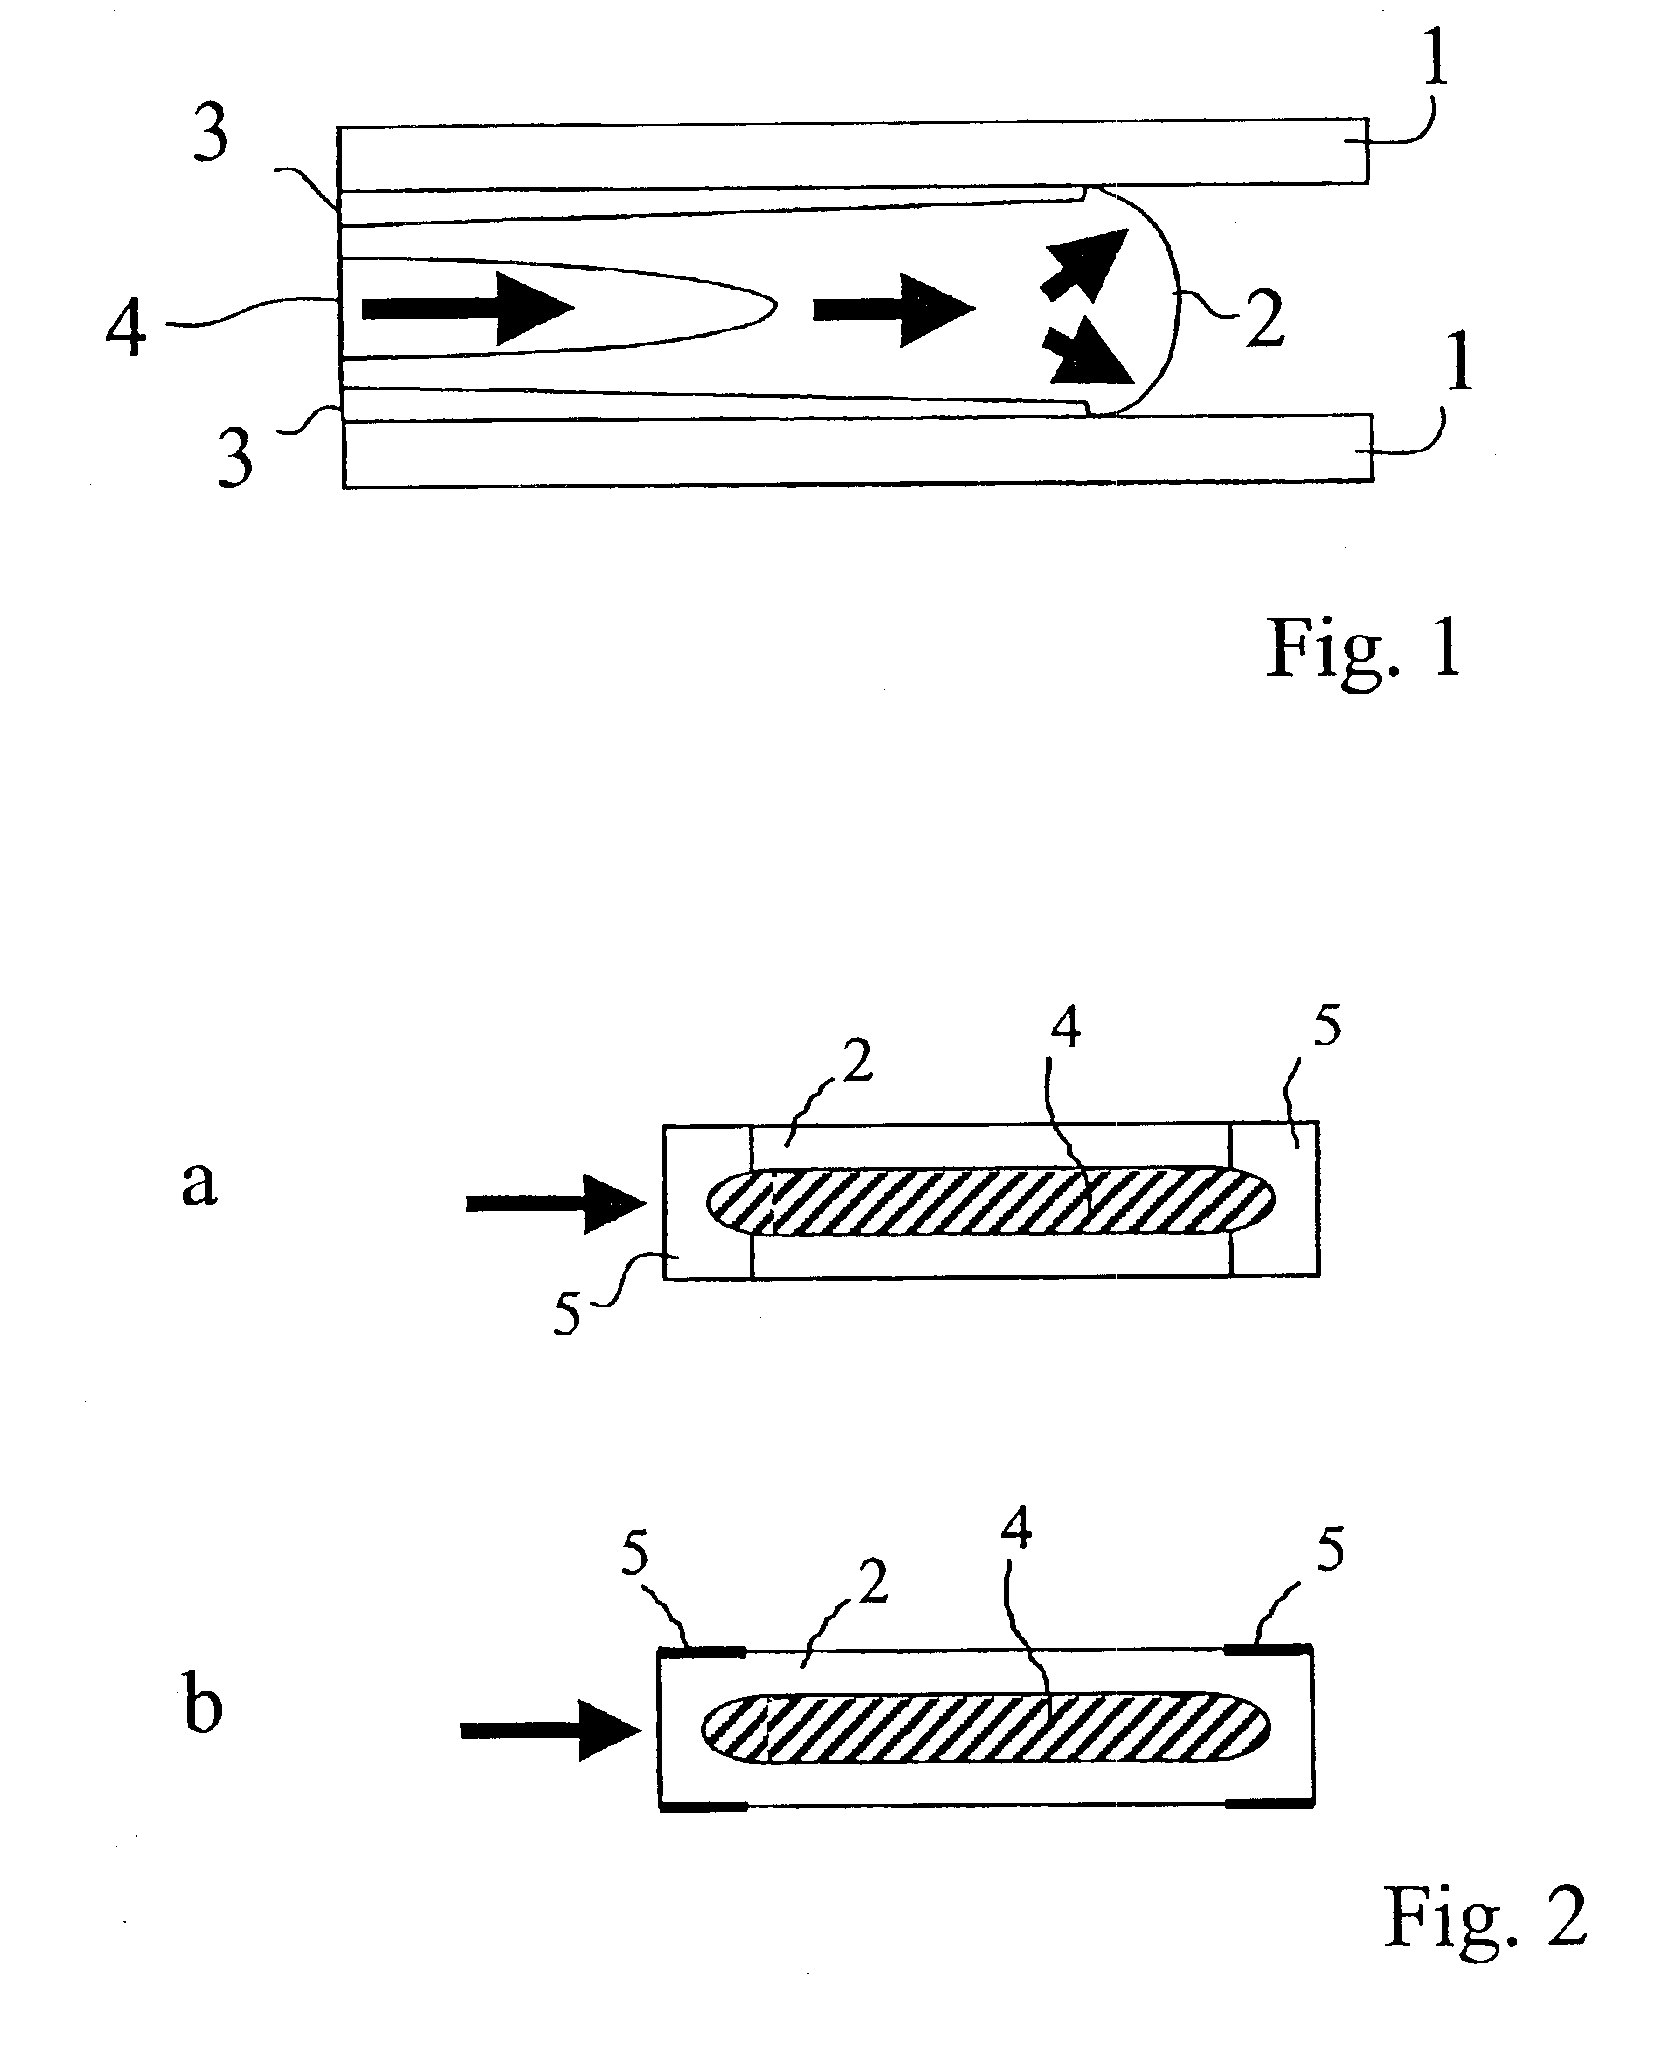 Method of producing a PTC-resistor device